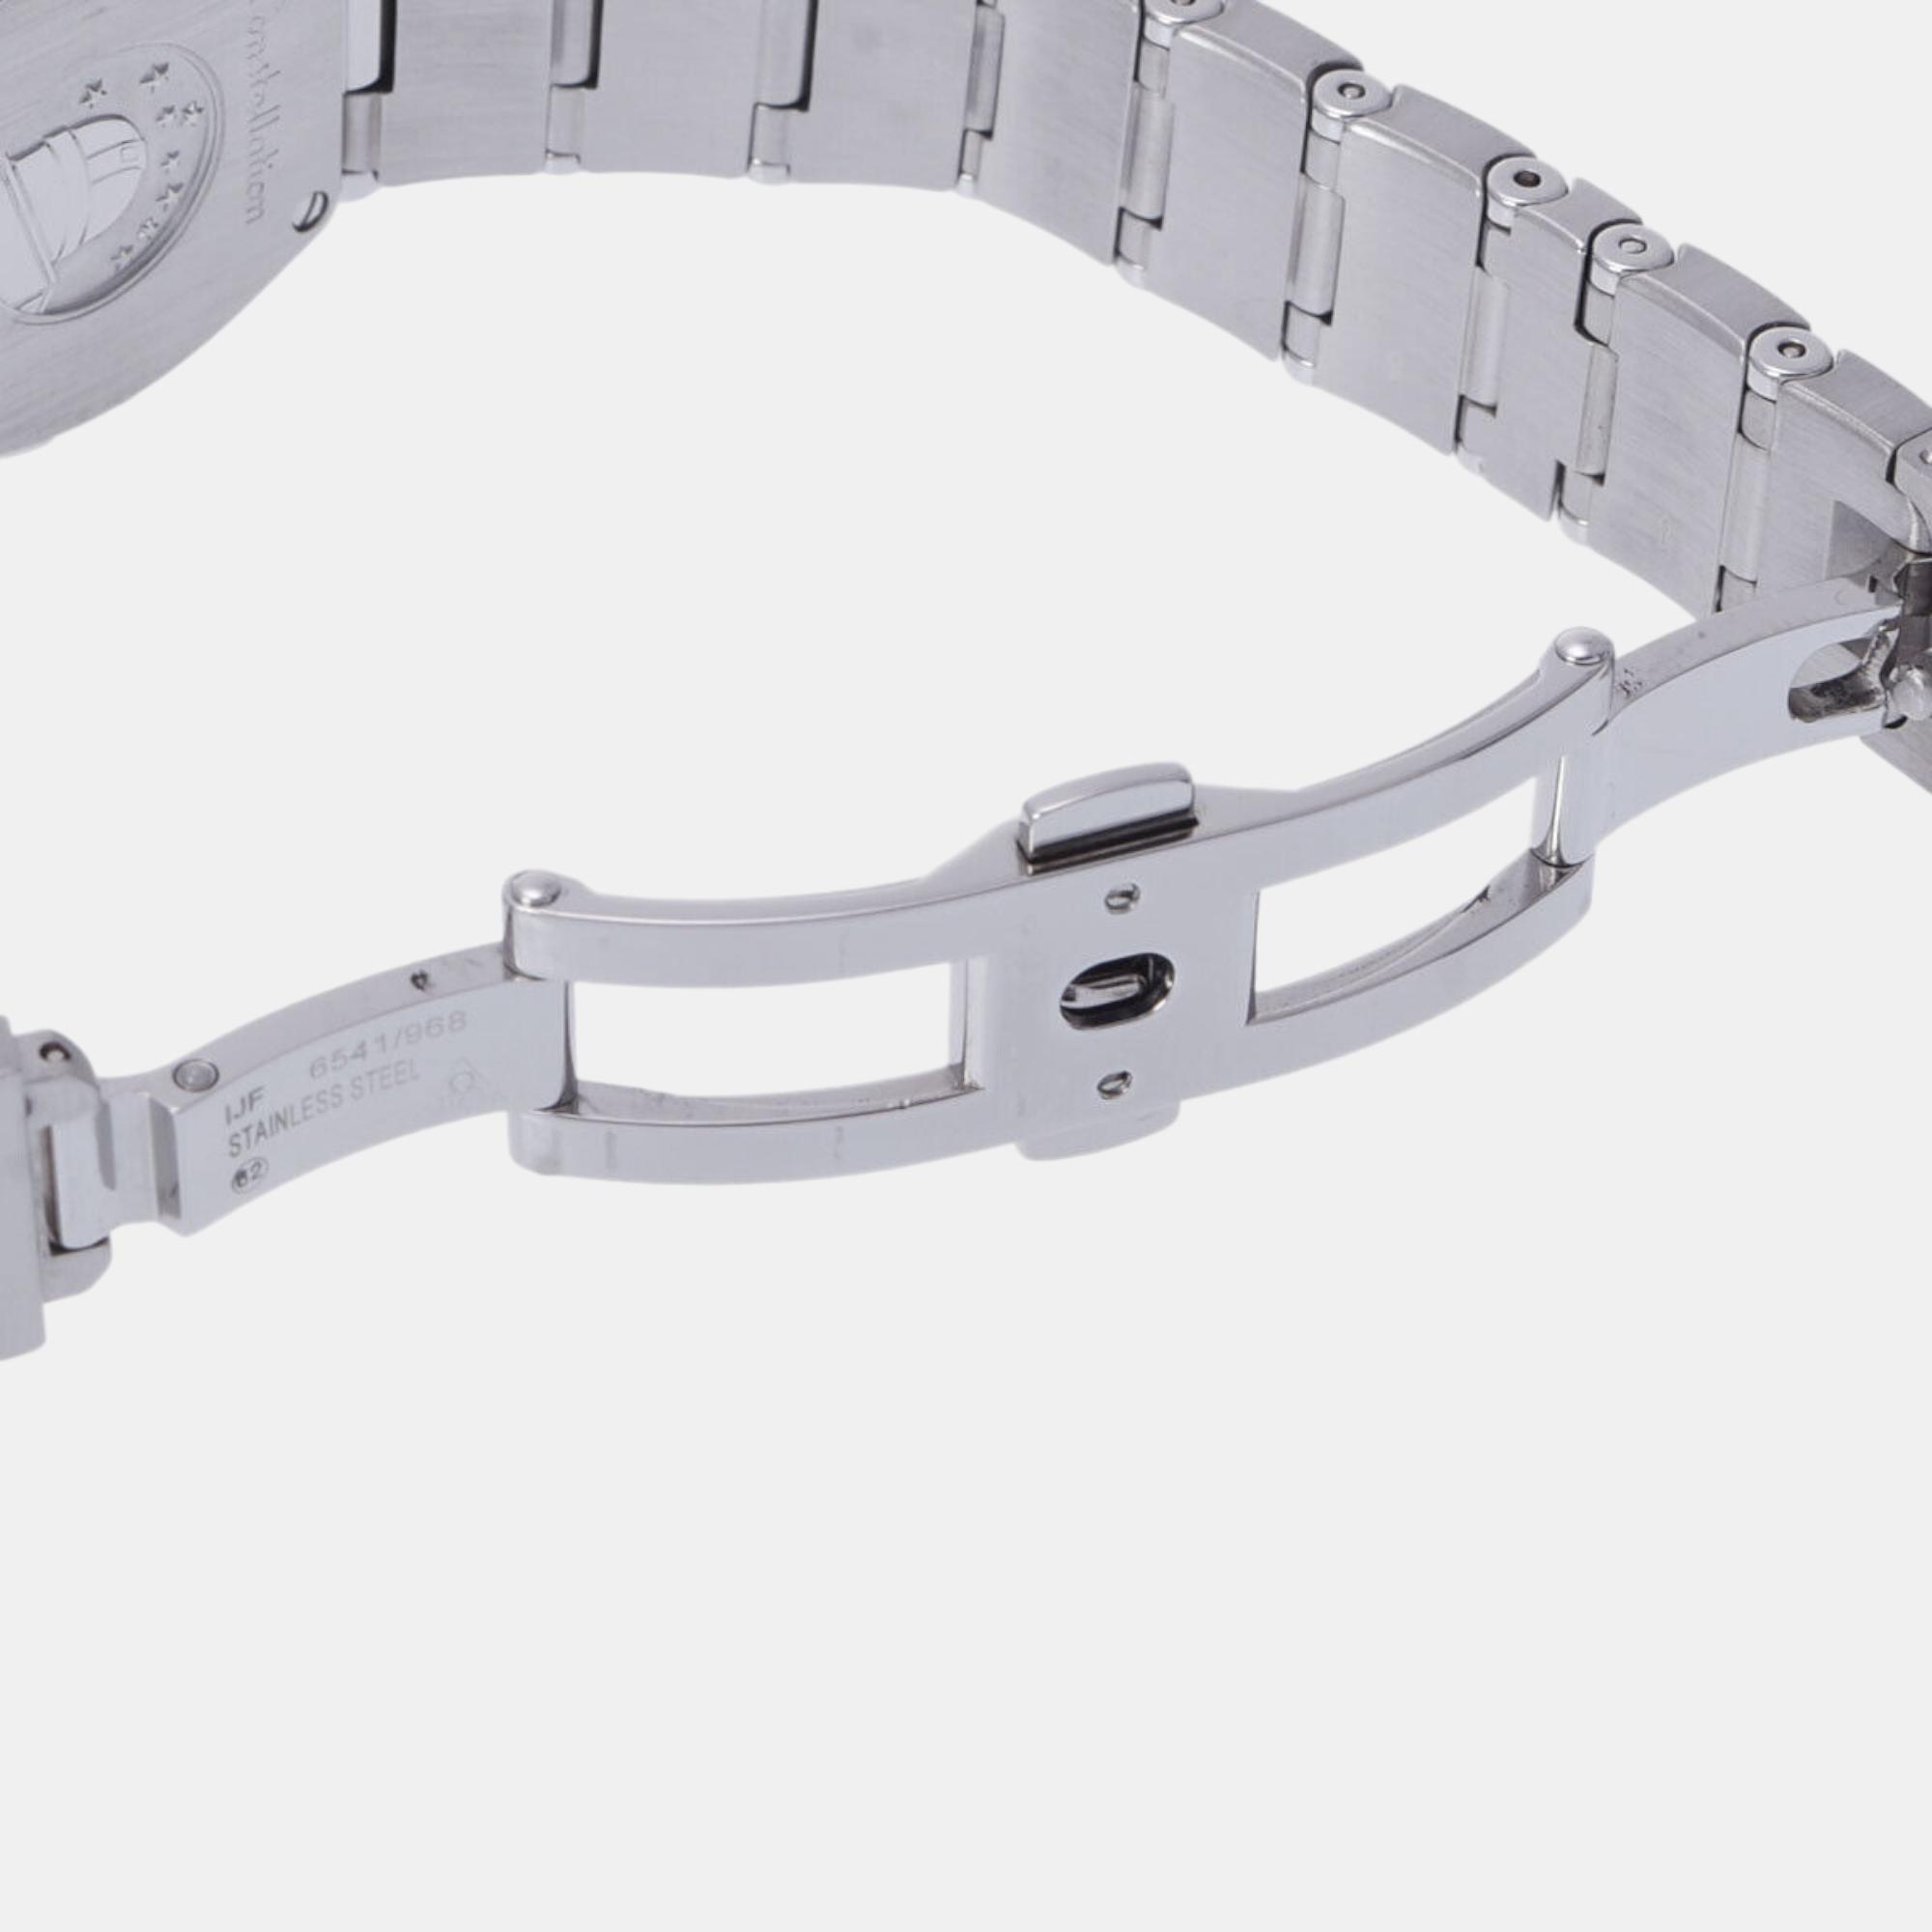 Omega White Shell Stainless Steel Constellation 123.10.24.60.05.001 Quartz Women's Wristwatch 24 Mm